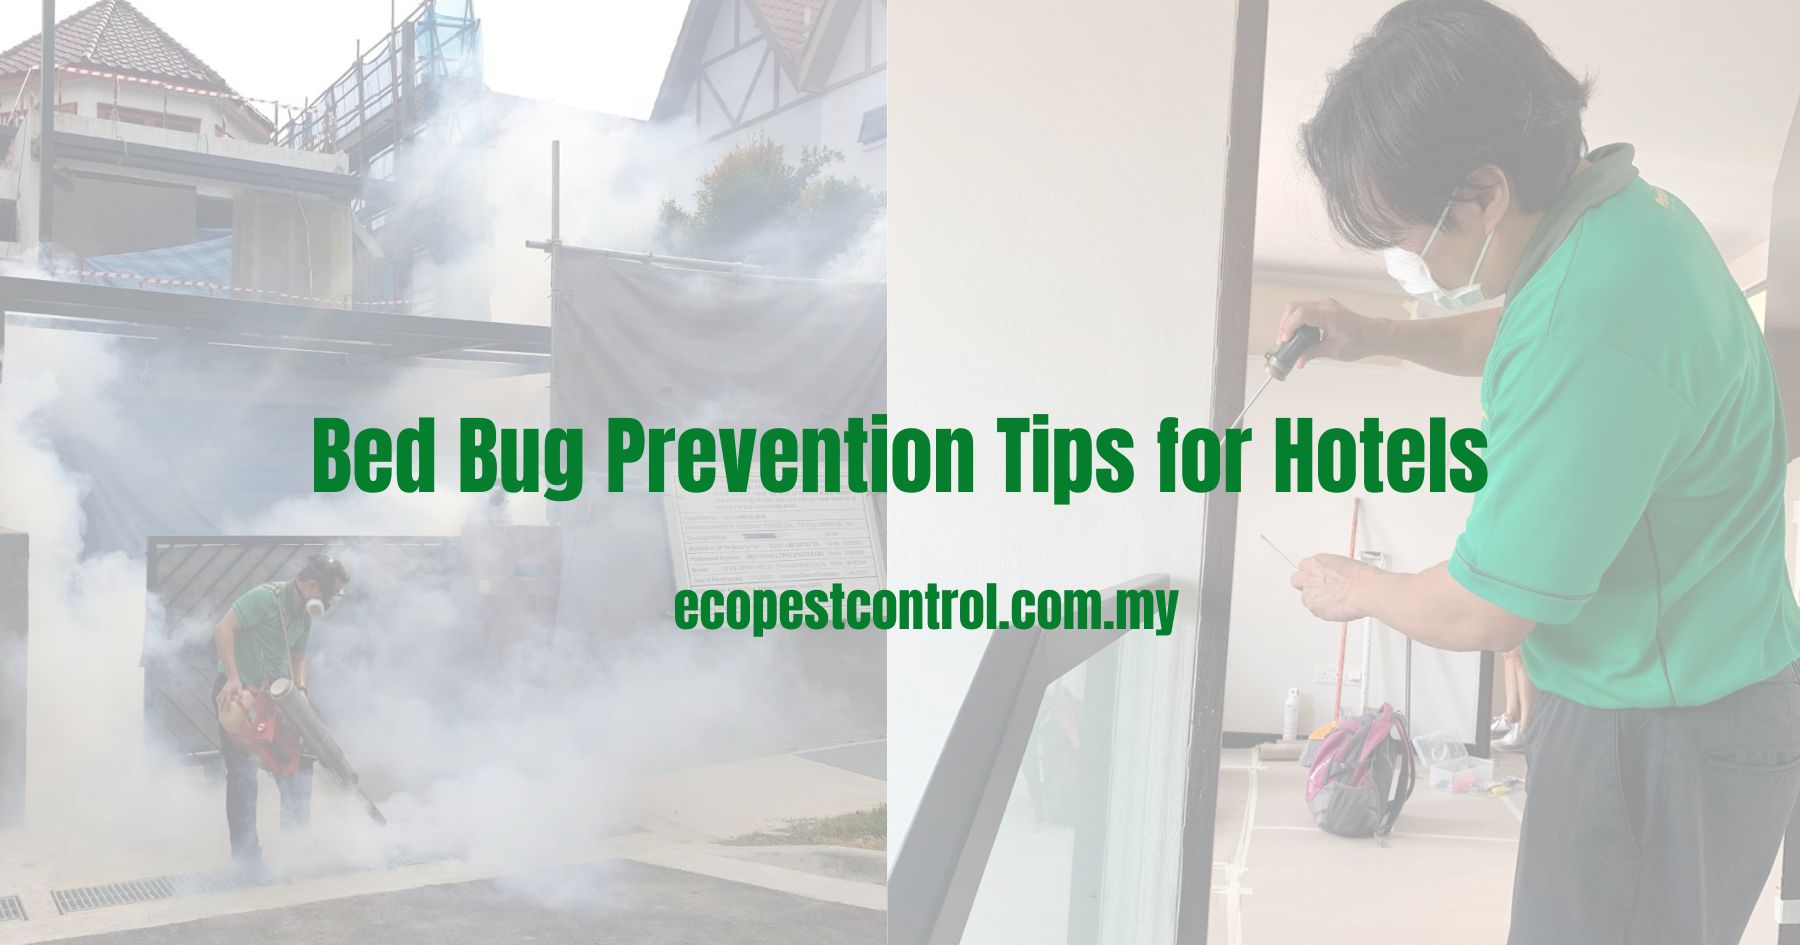 Bed Bug Prevention Tips for Hotels